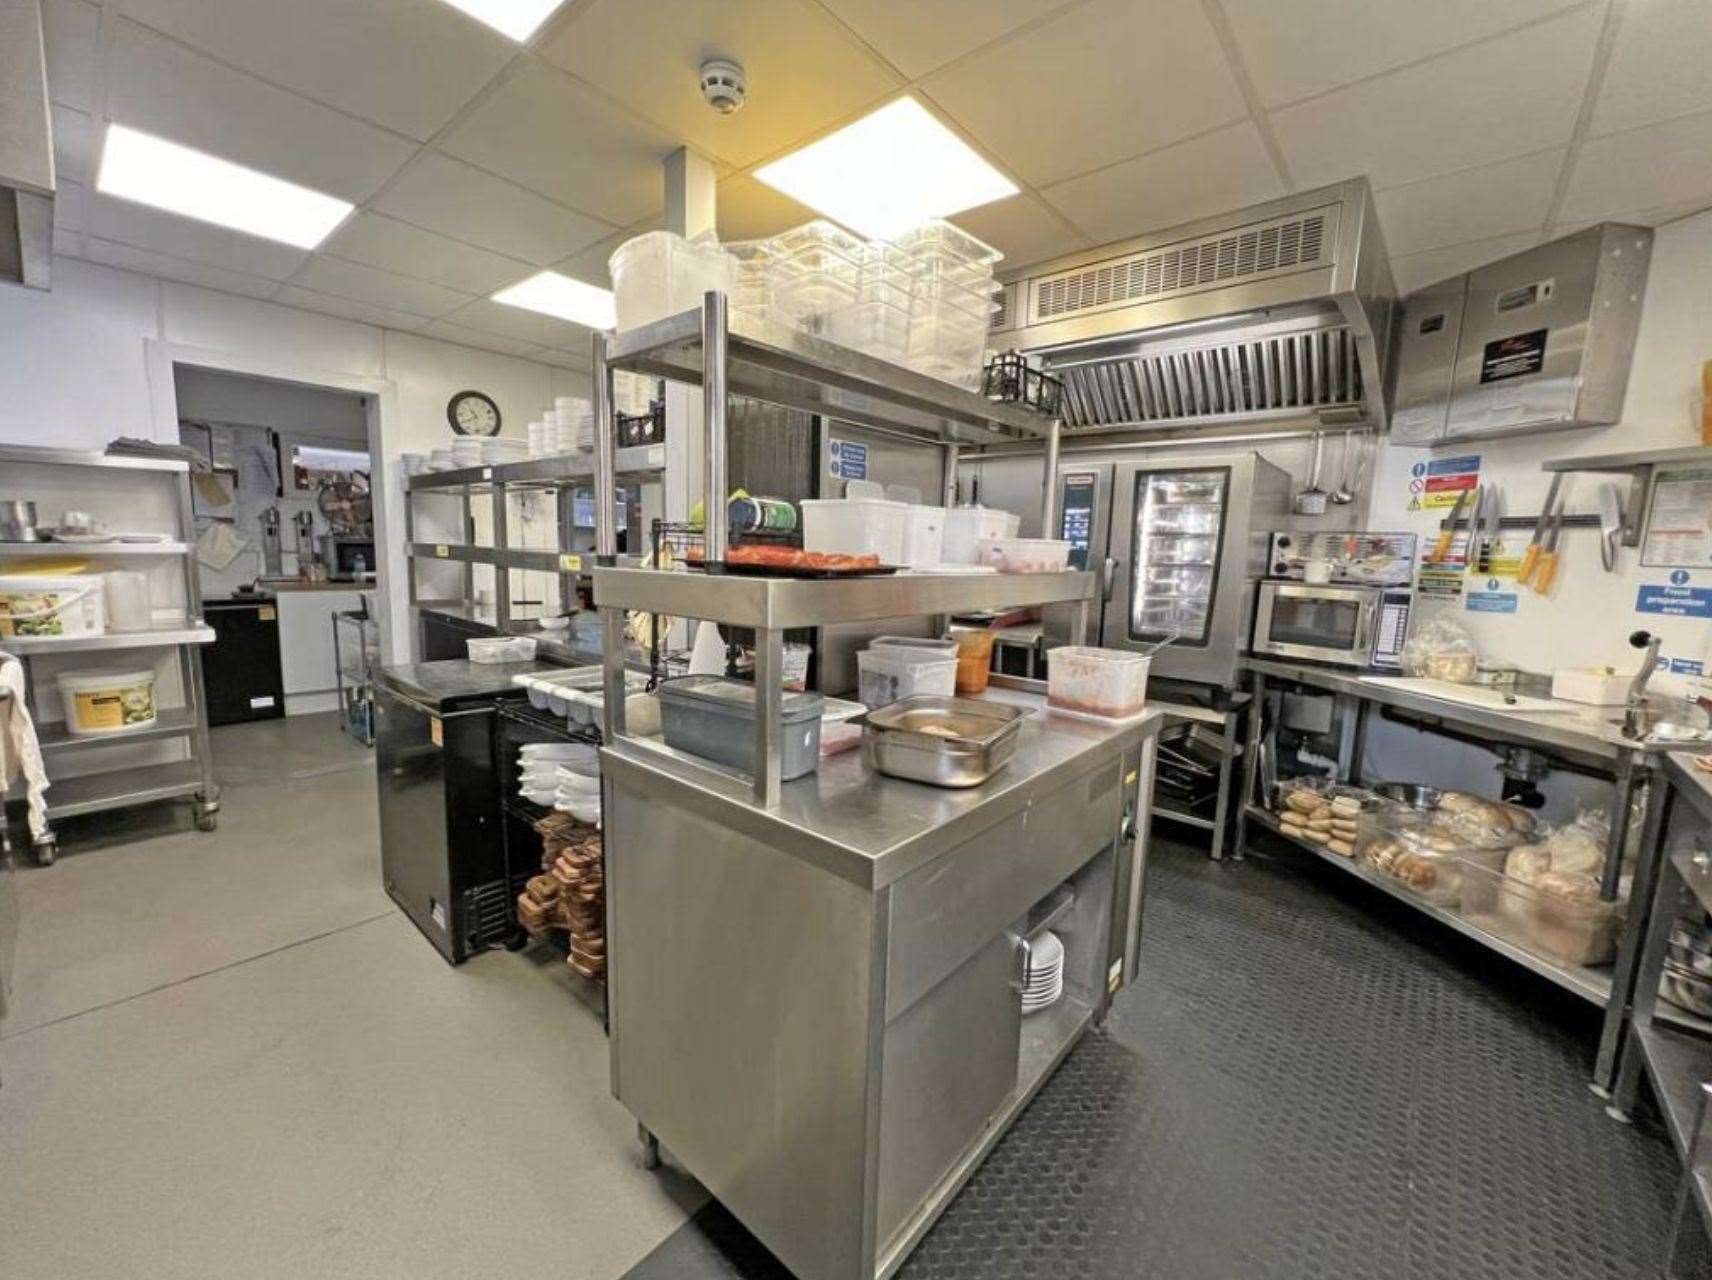 Coppers Bistro's kitchen. Picture: Christie & Co